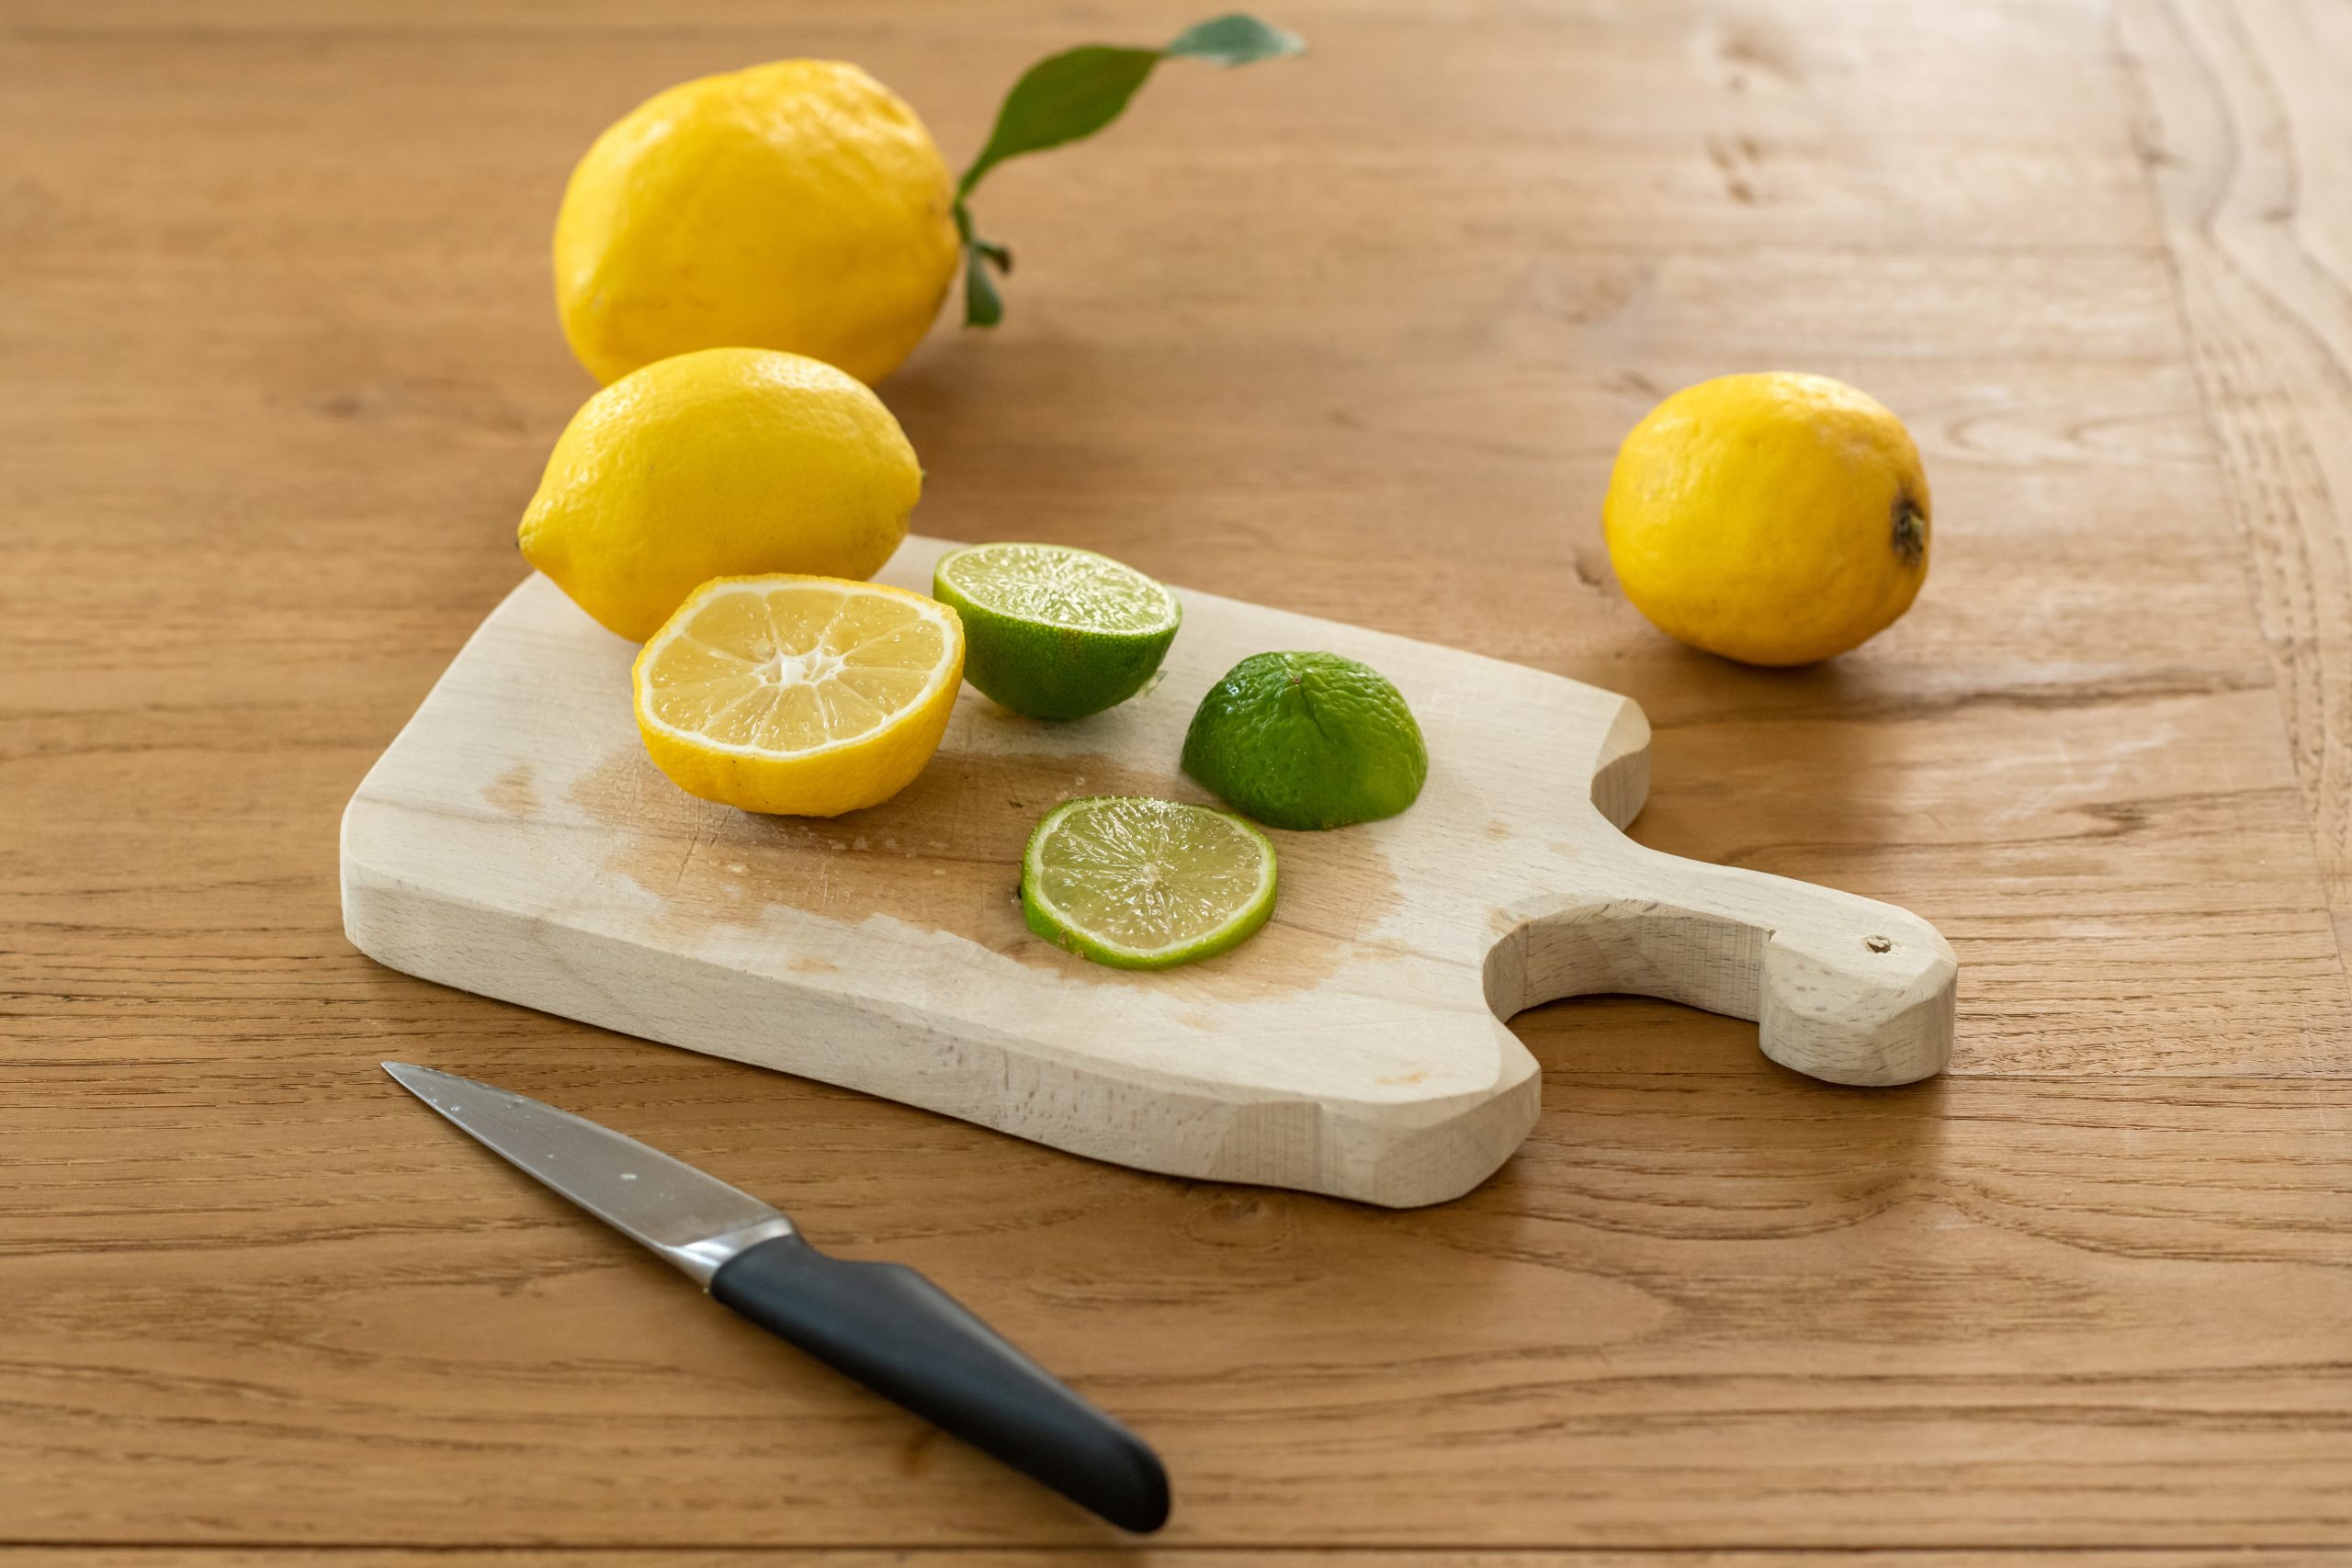 Health Benefits of lemon